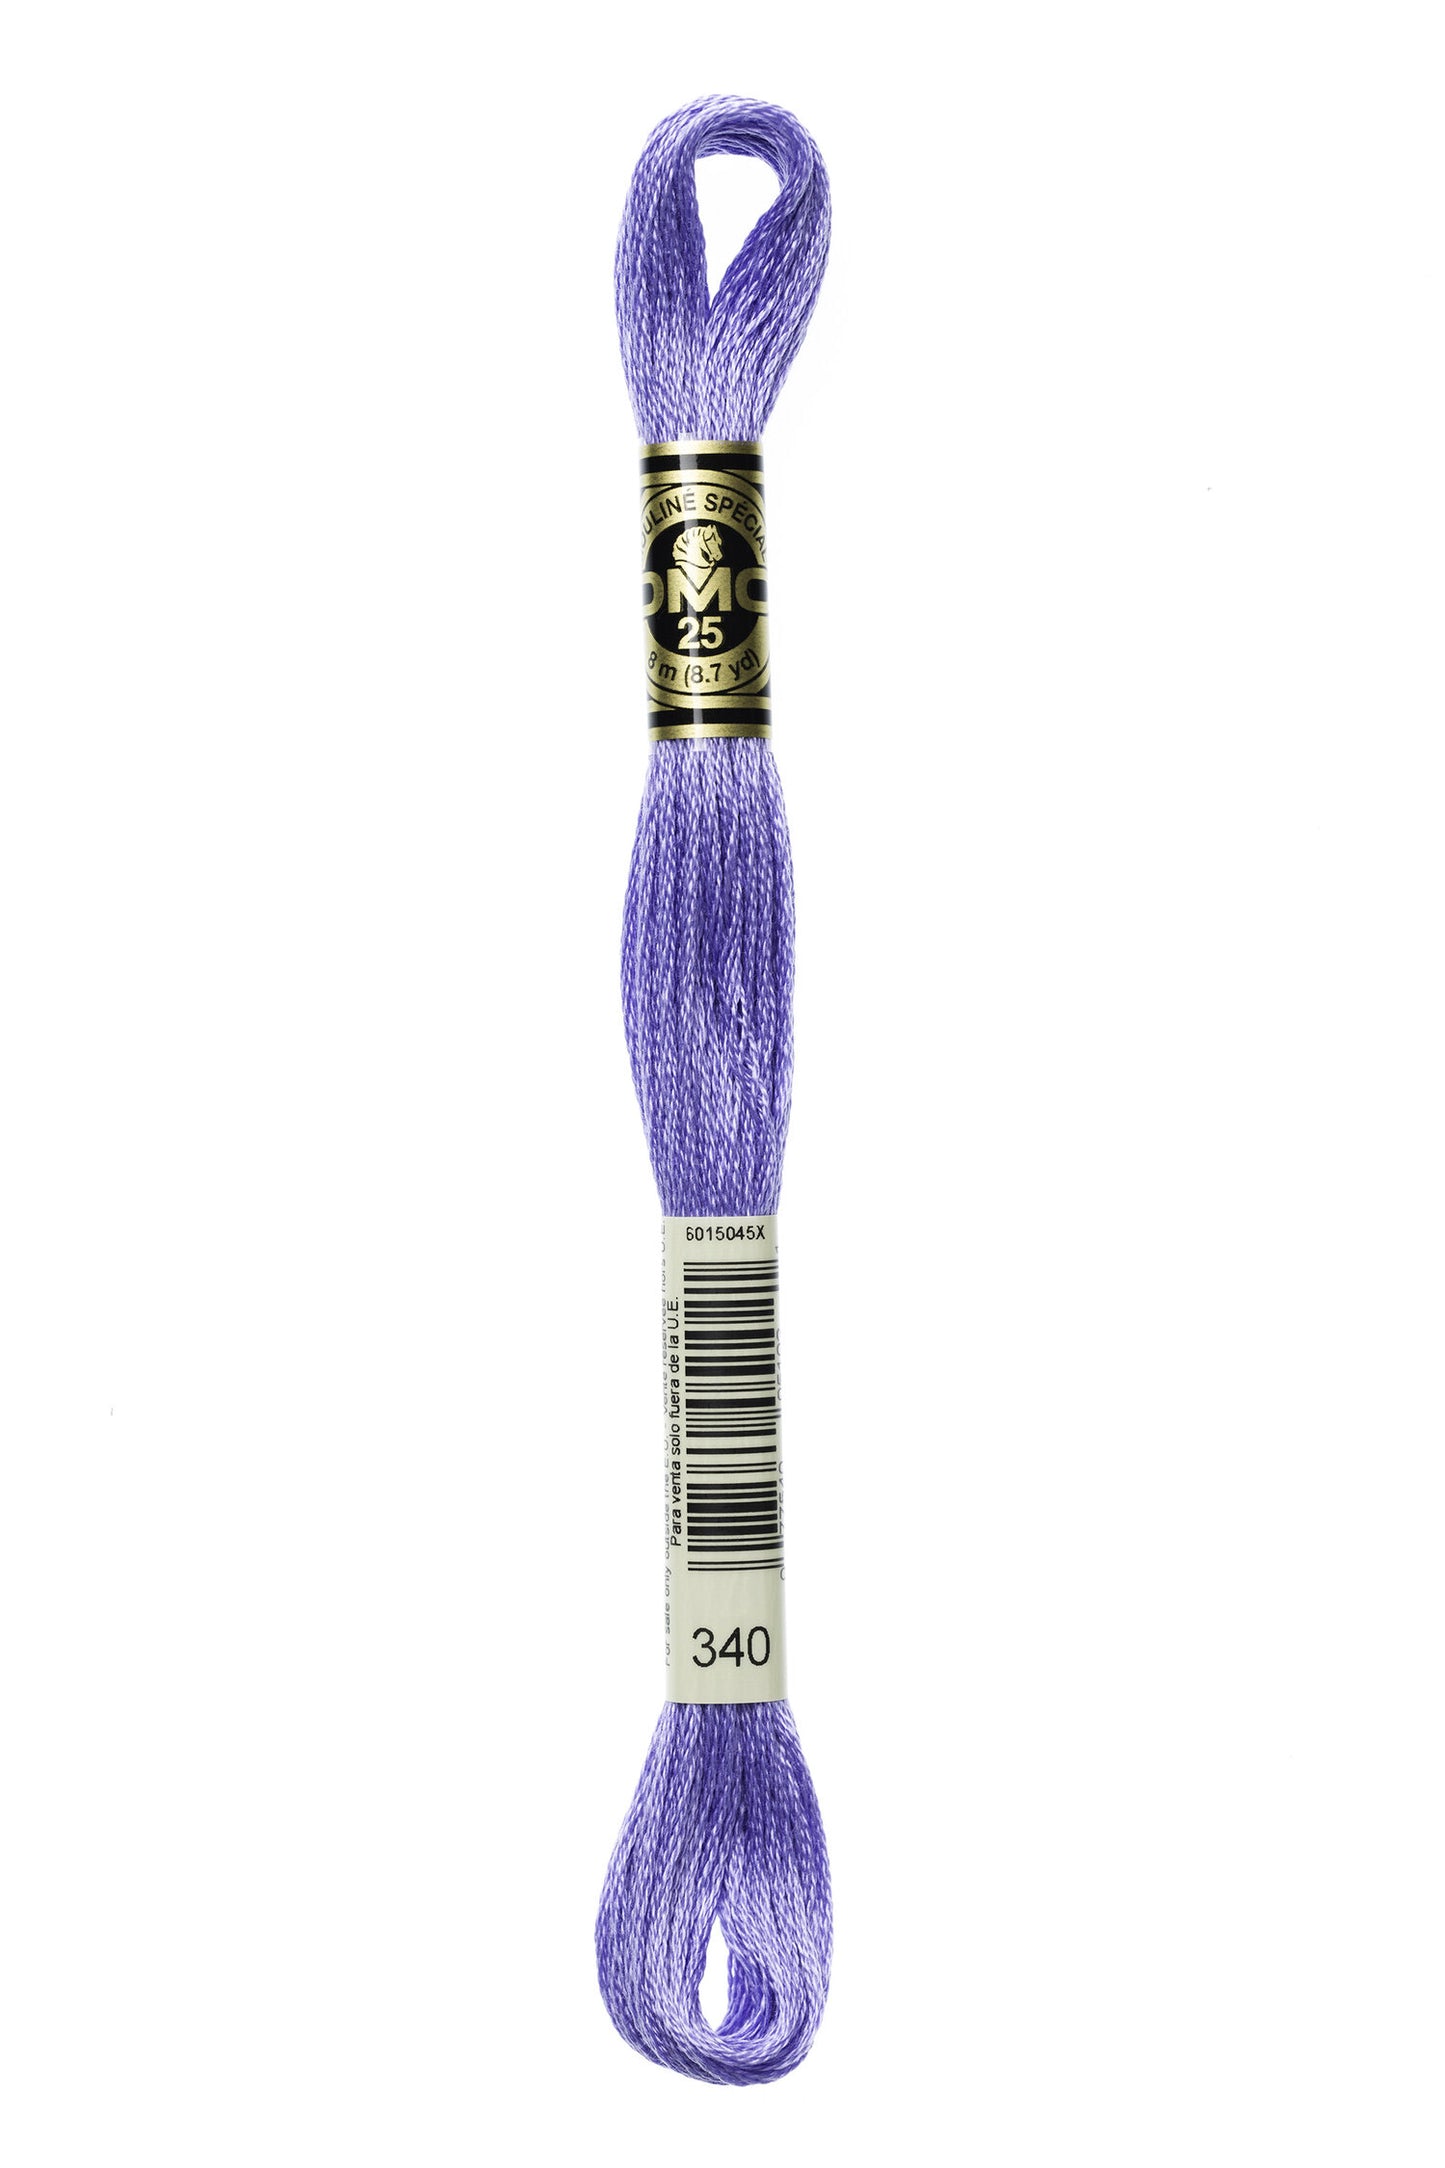 DMC 340 - Blue Violet - Medium - DMC 6 Strand Embroidery Thread, Thread & Floss, Thread & Floss, The Crafty Grimalkin - A Cross Stitch Store